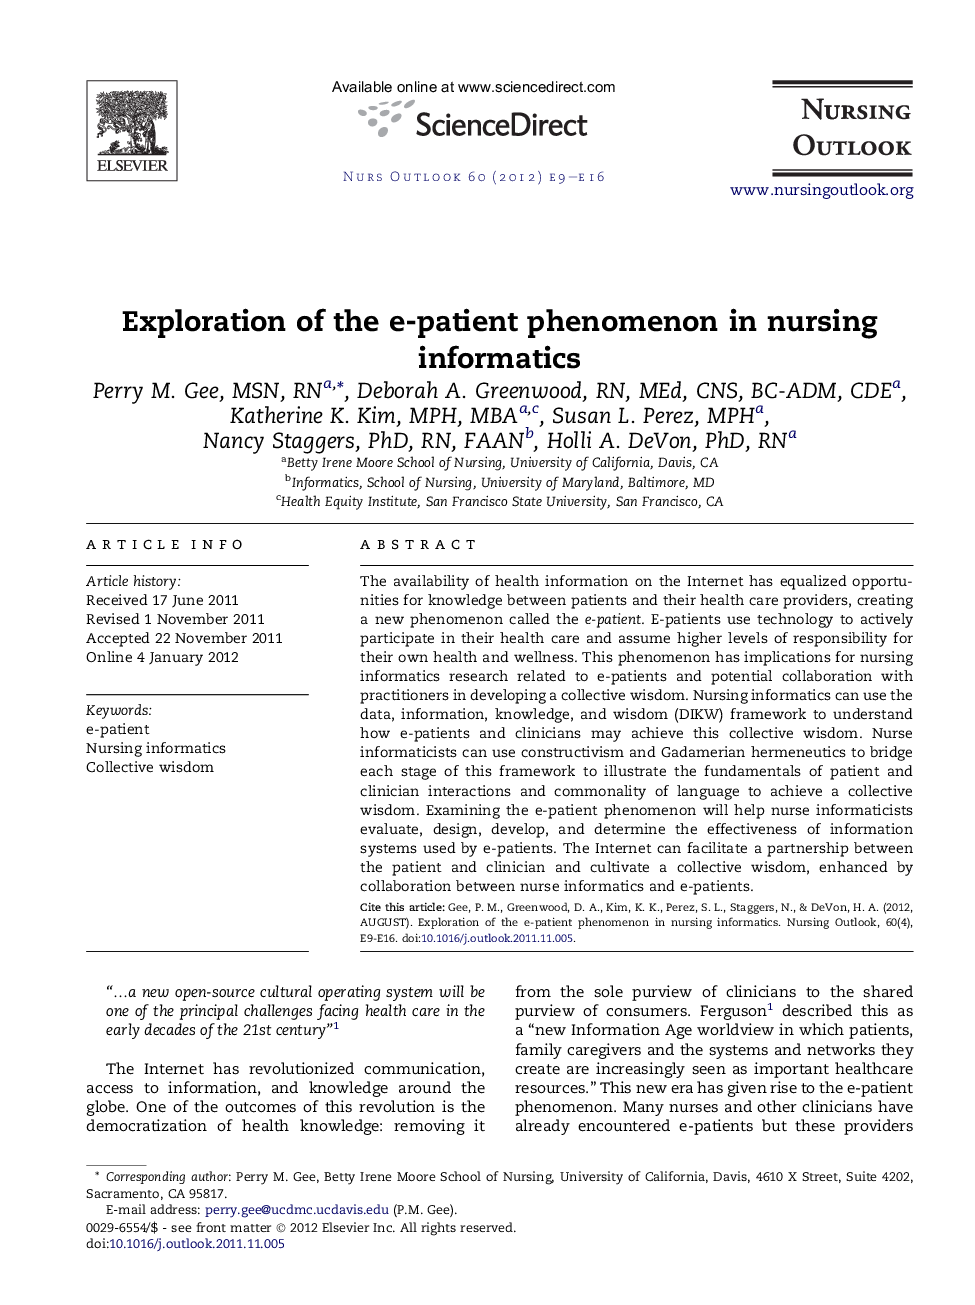 Exploration of the e-patient phenomenon in nursing informatics